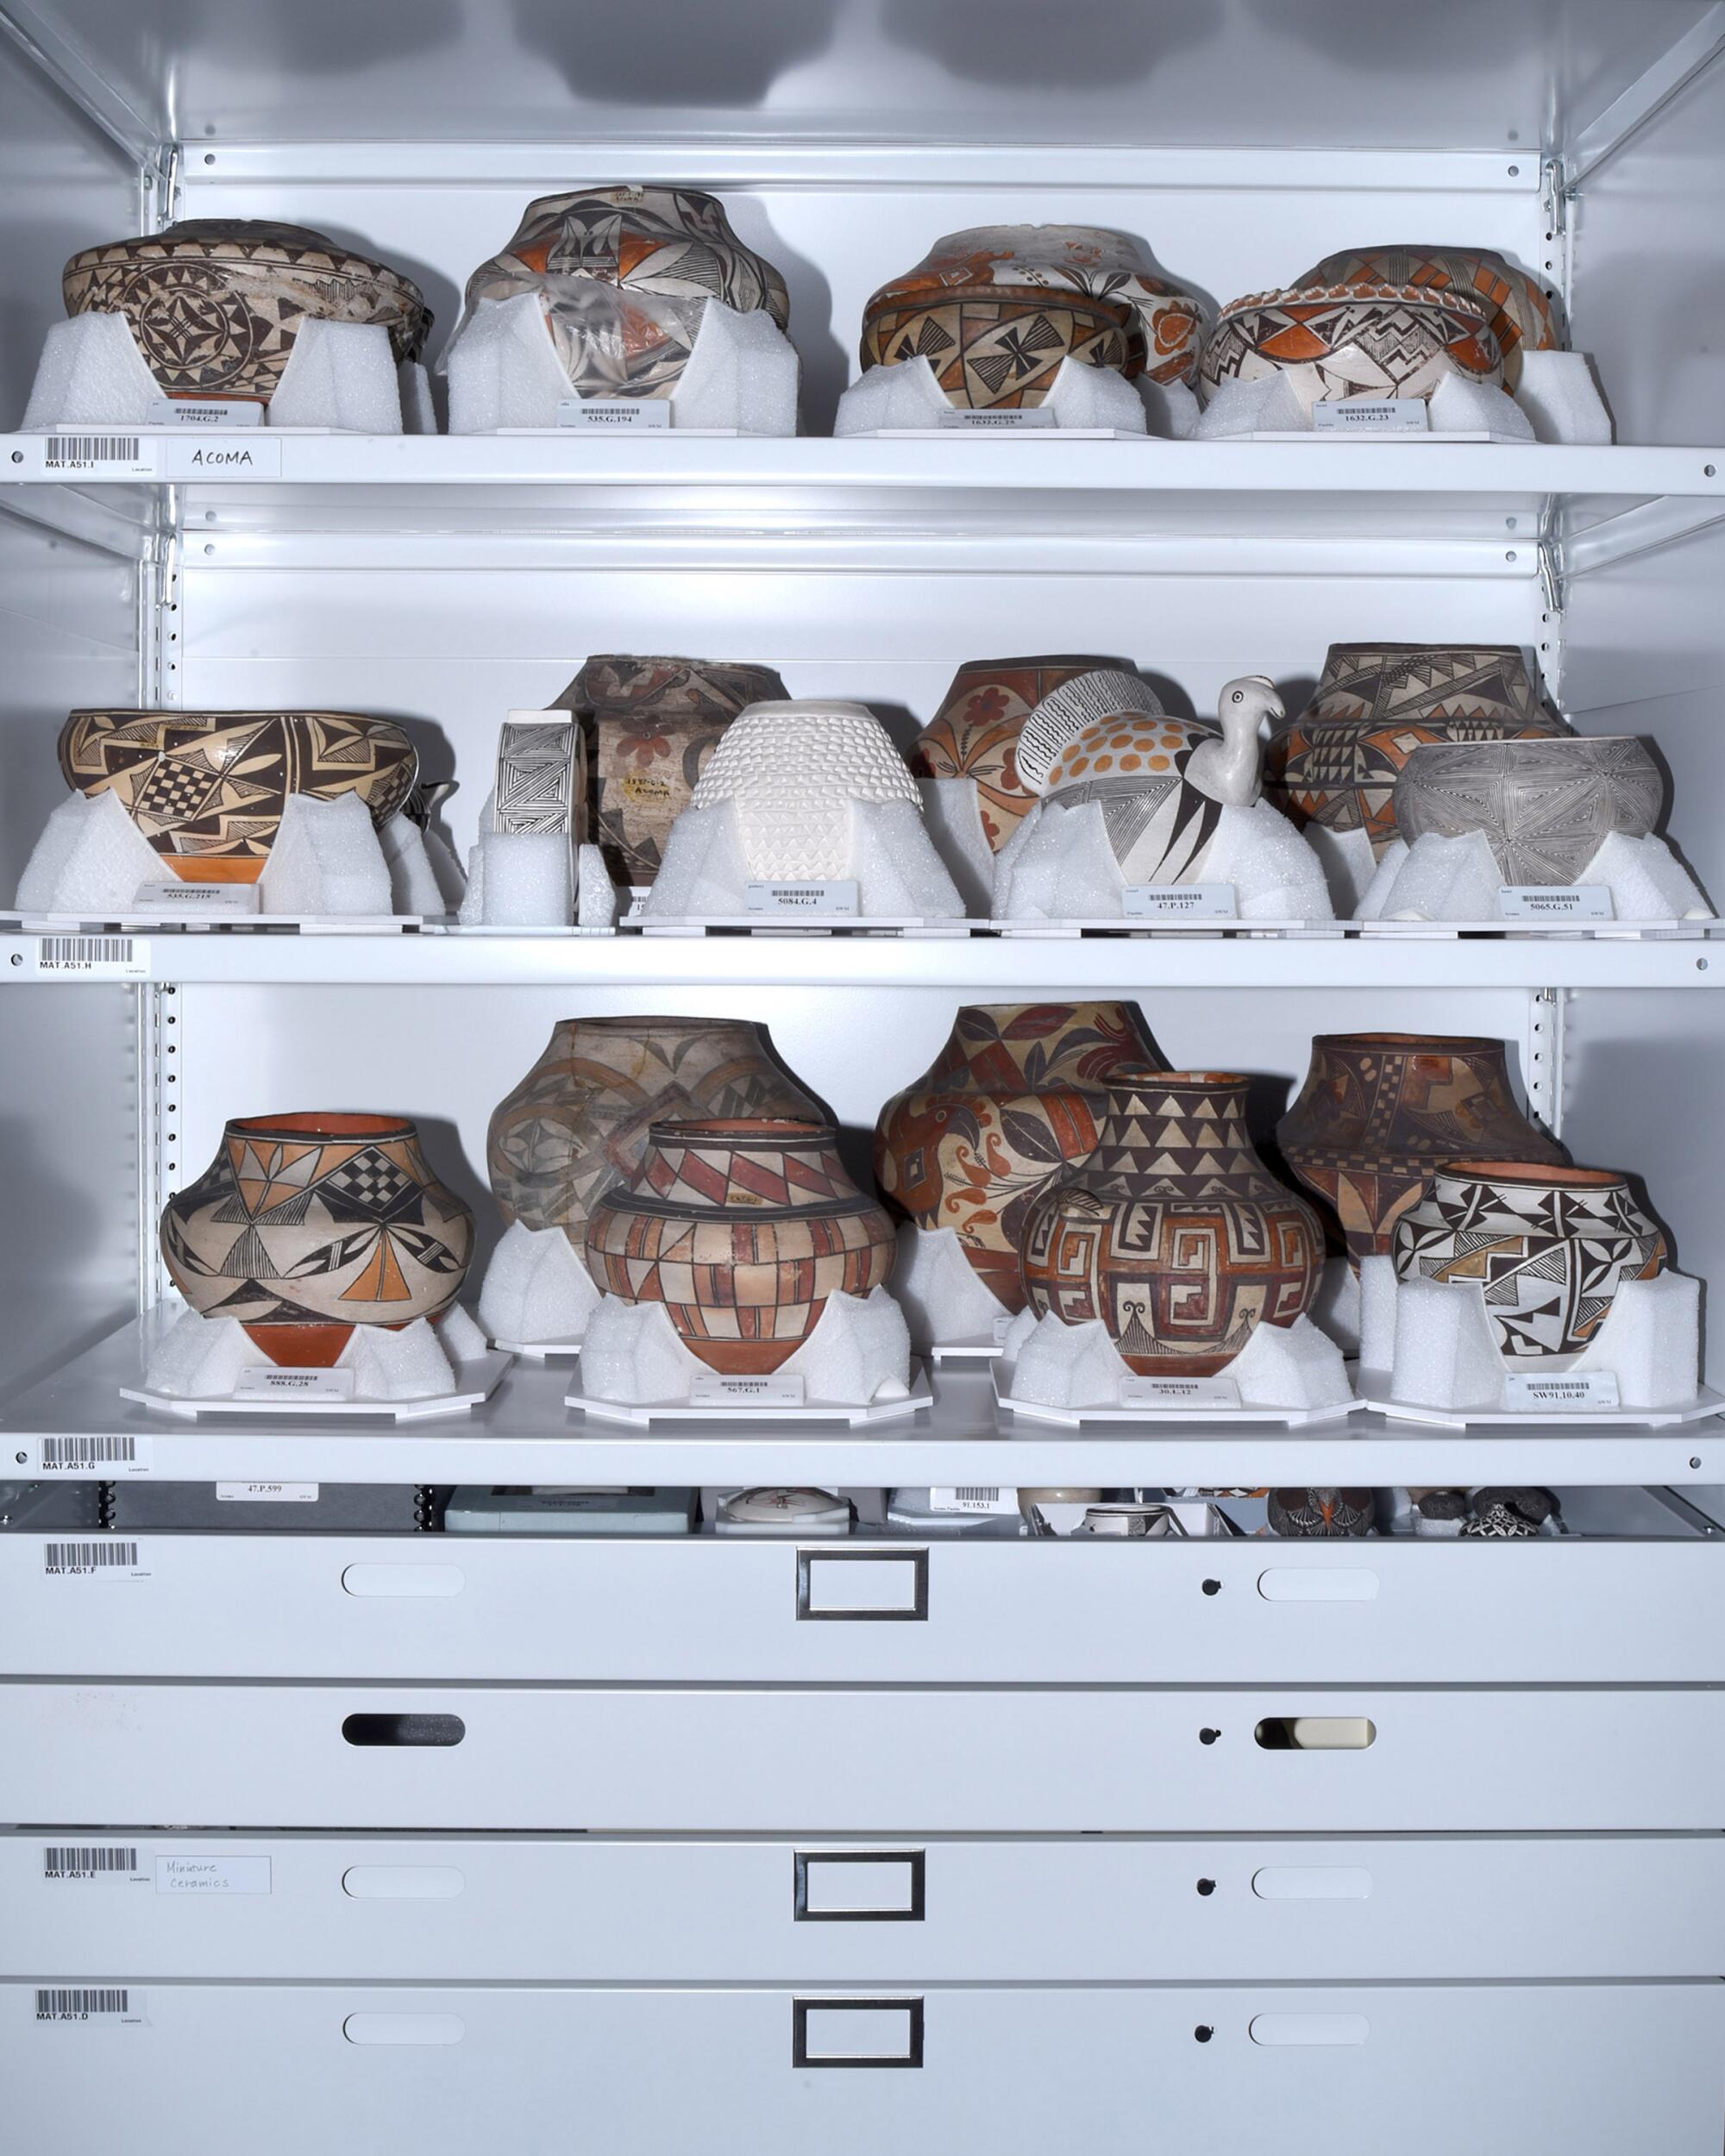 Acoma ceramics in rows on storage shelves